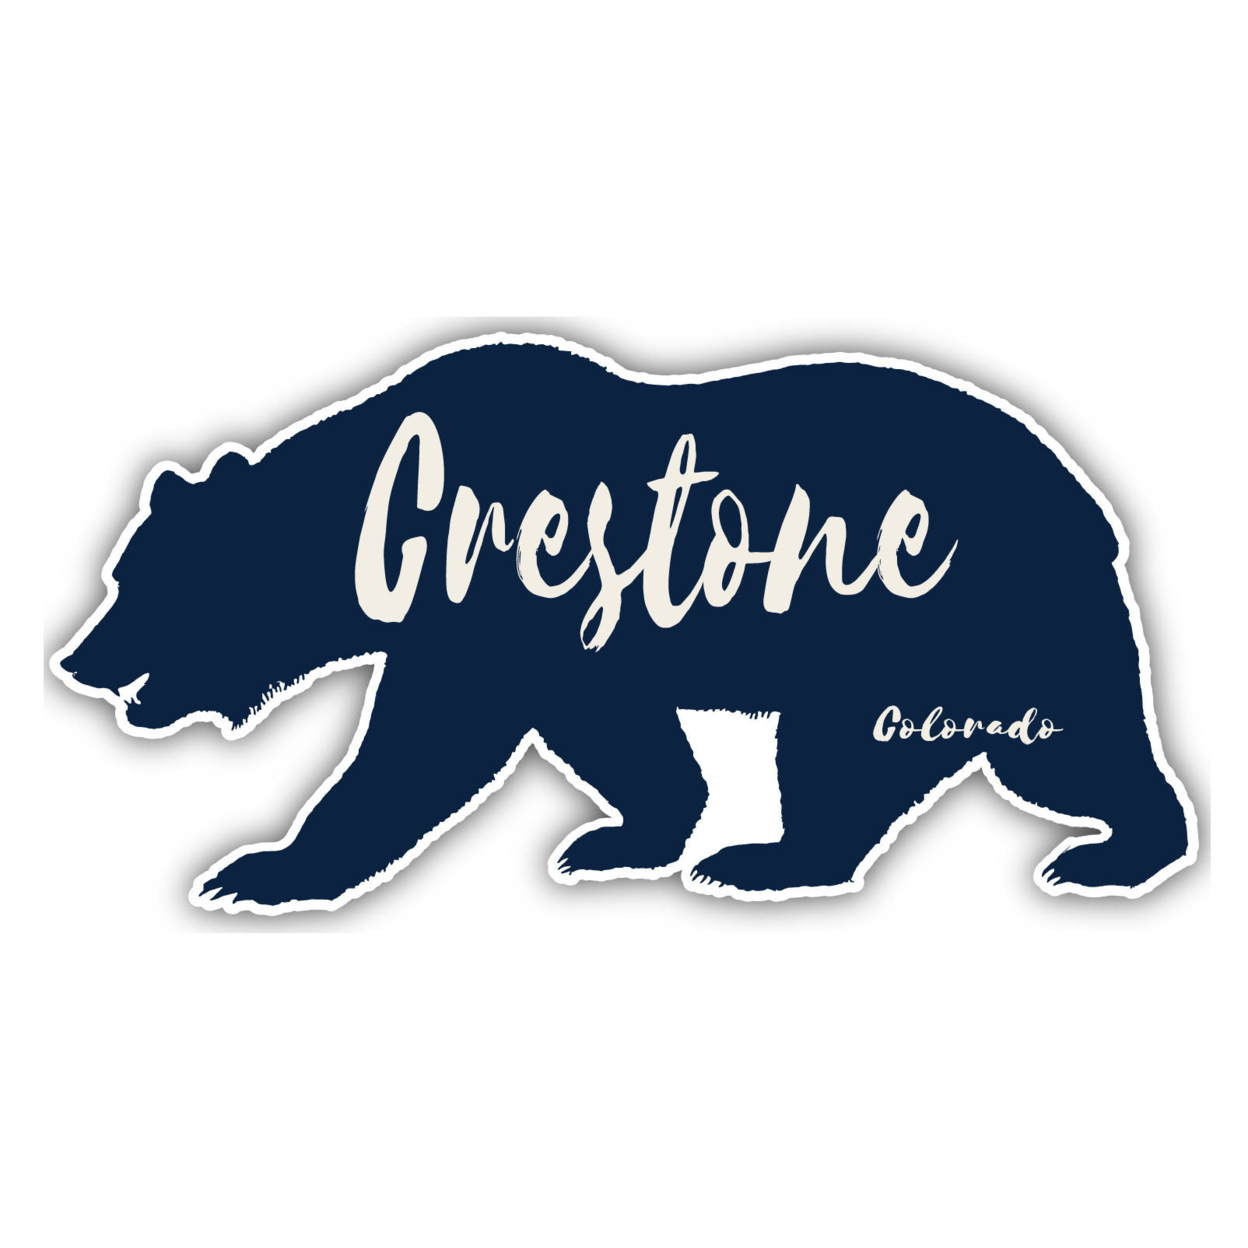 Crestone Colorado Souvenir Decorative Stickers (Choose Theme And Size) - 4-Pack, 2-Inch, Bear